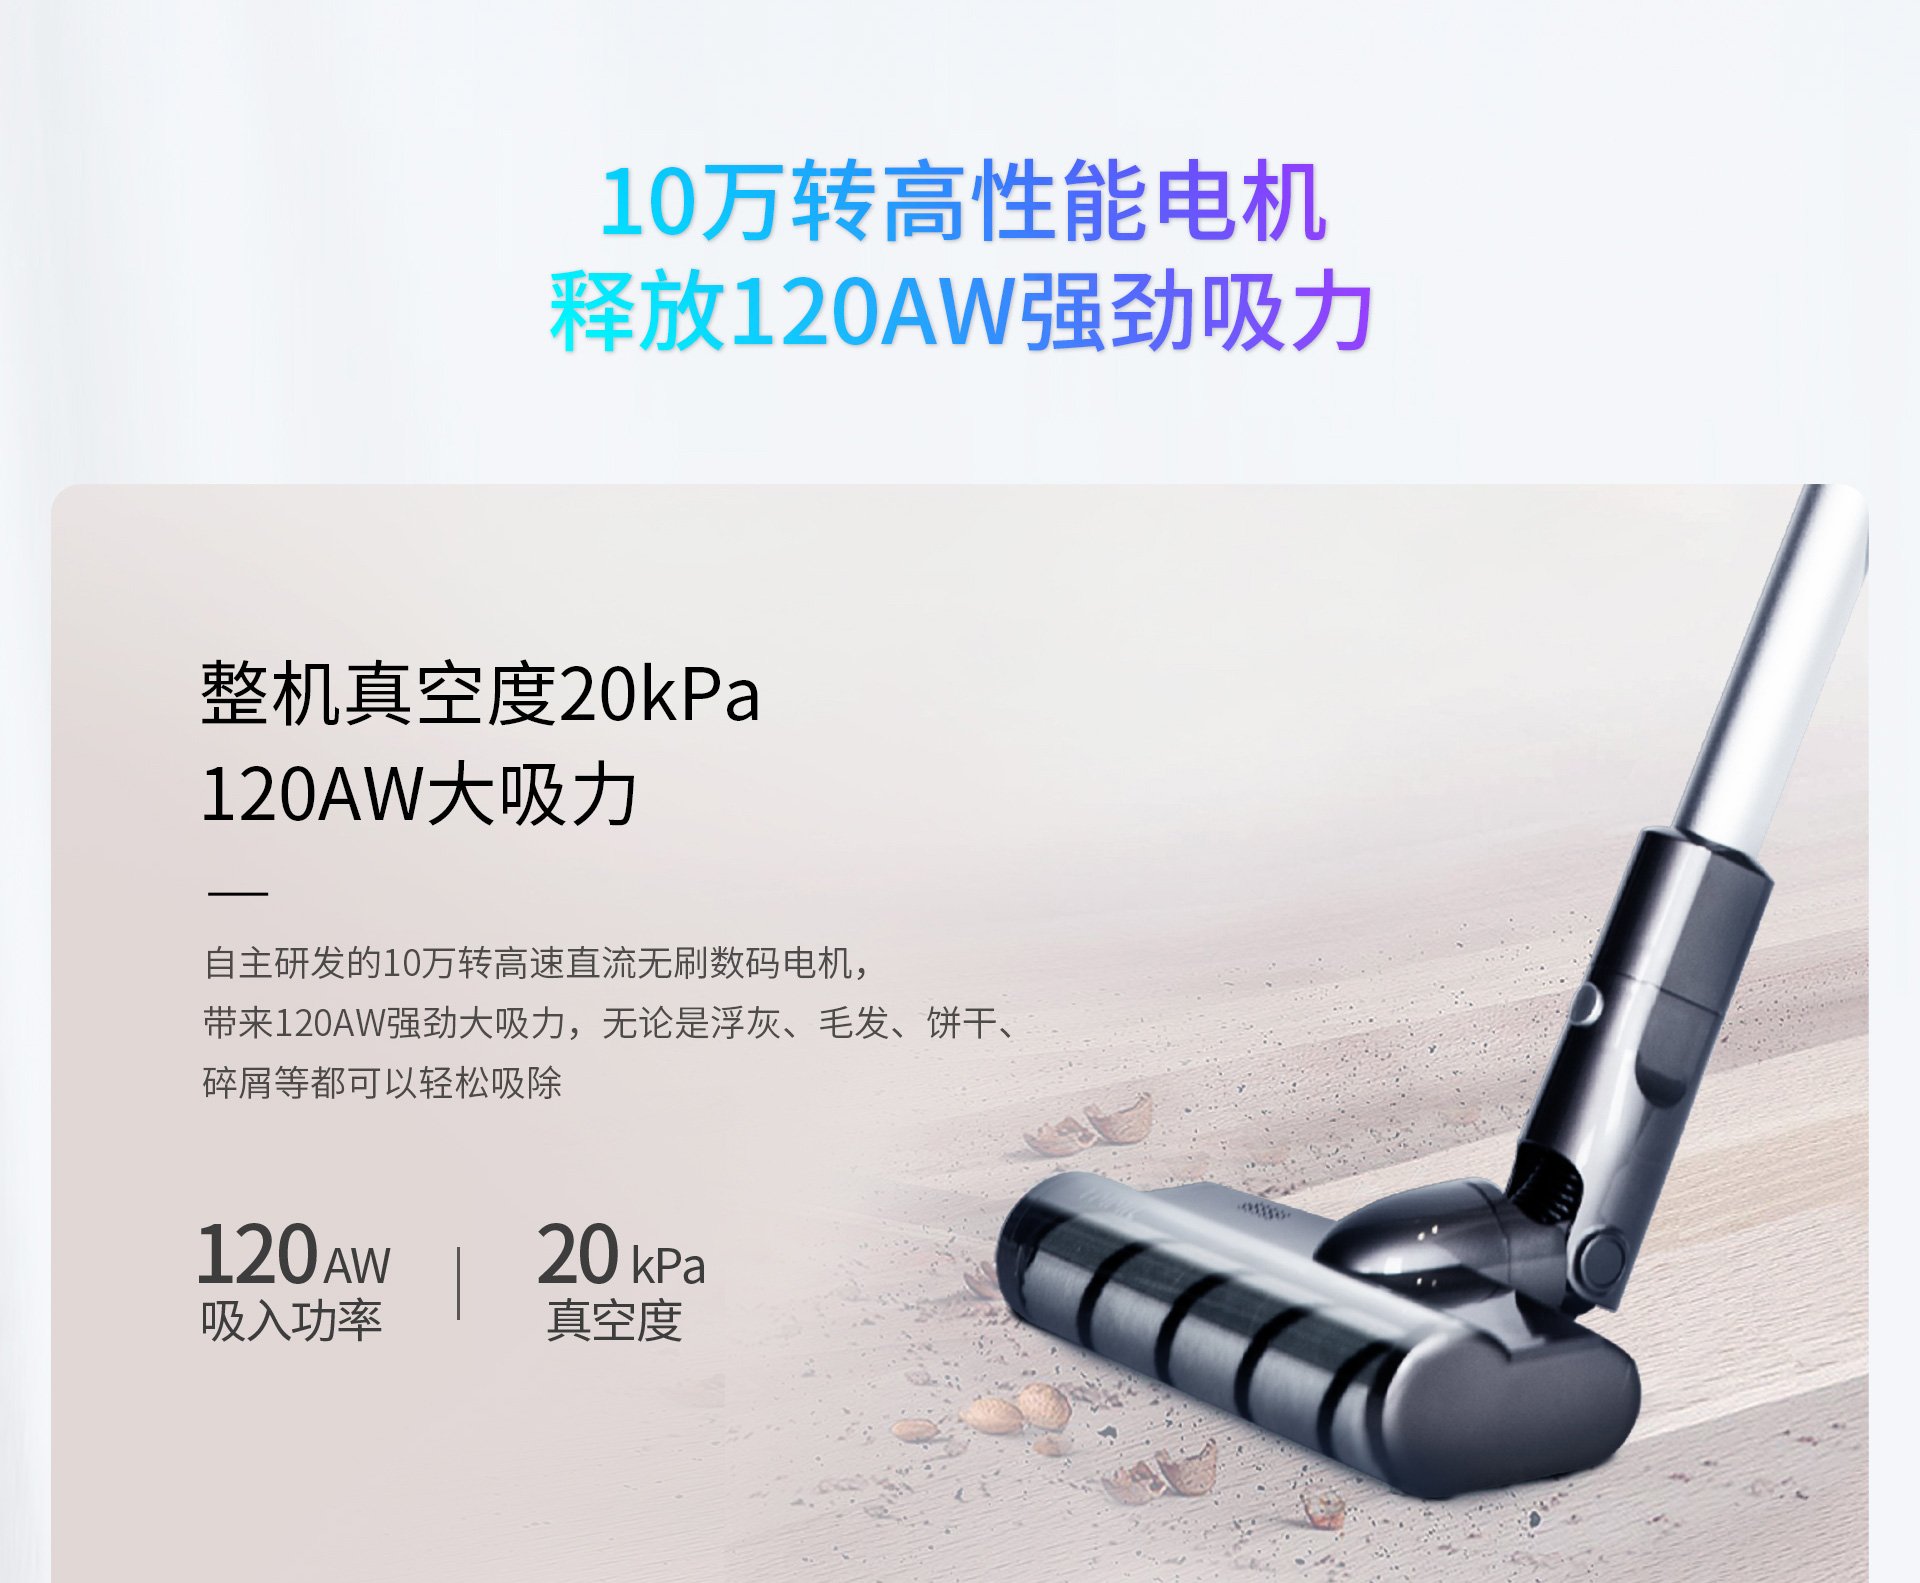 Huawei Jimmy Smart Handheld Wireless Vacuum Cleaner 1S